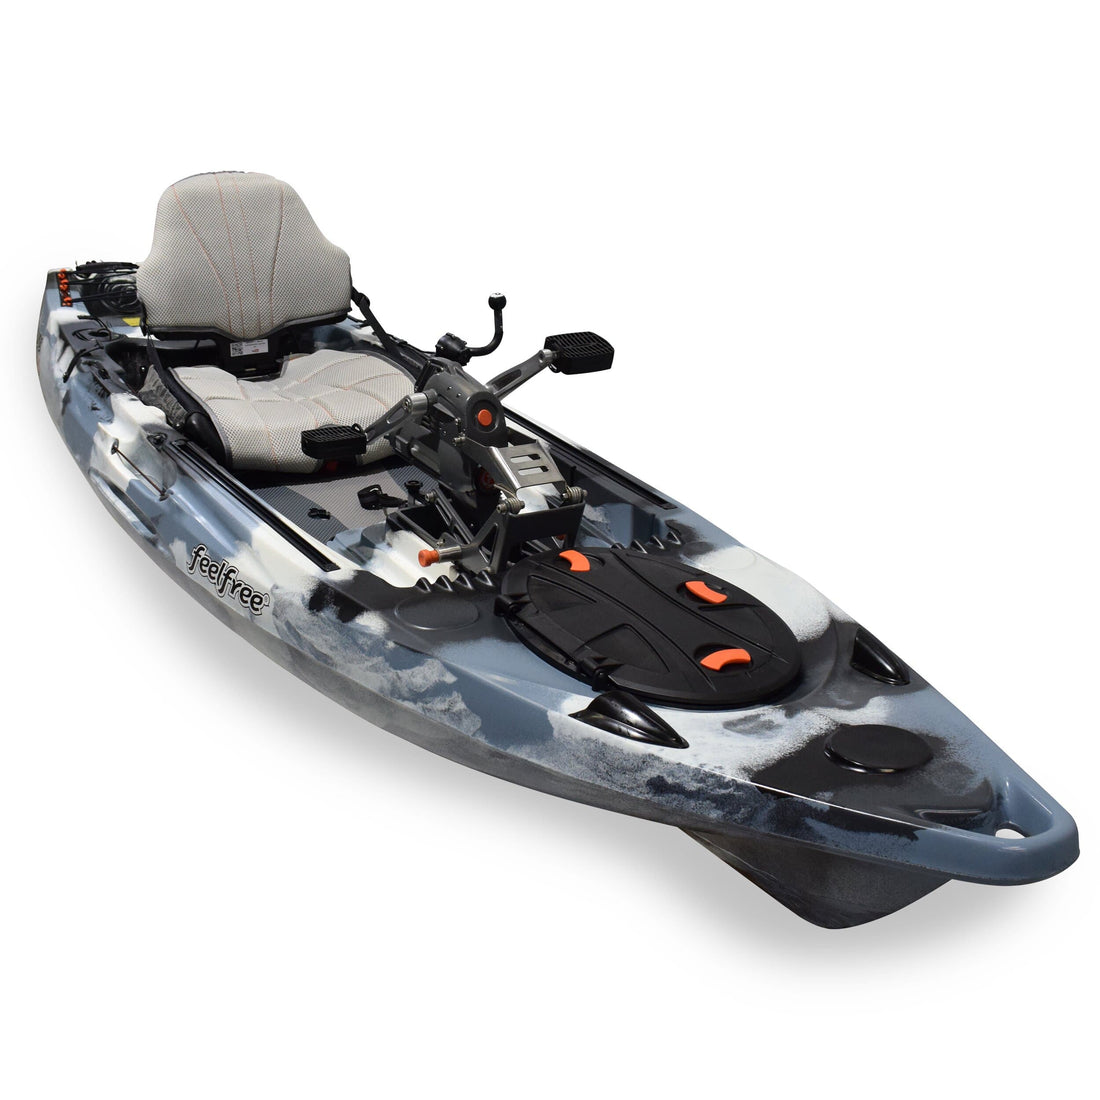 Kayak Lure 11.5 V2